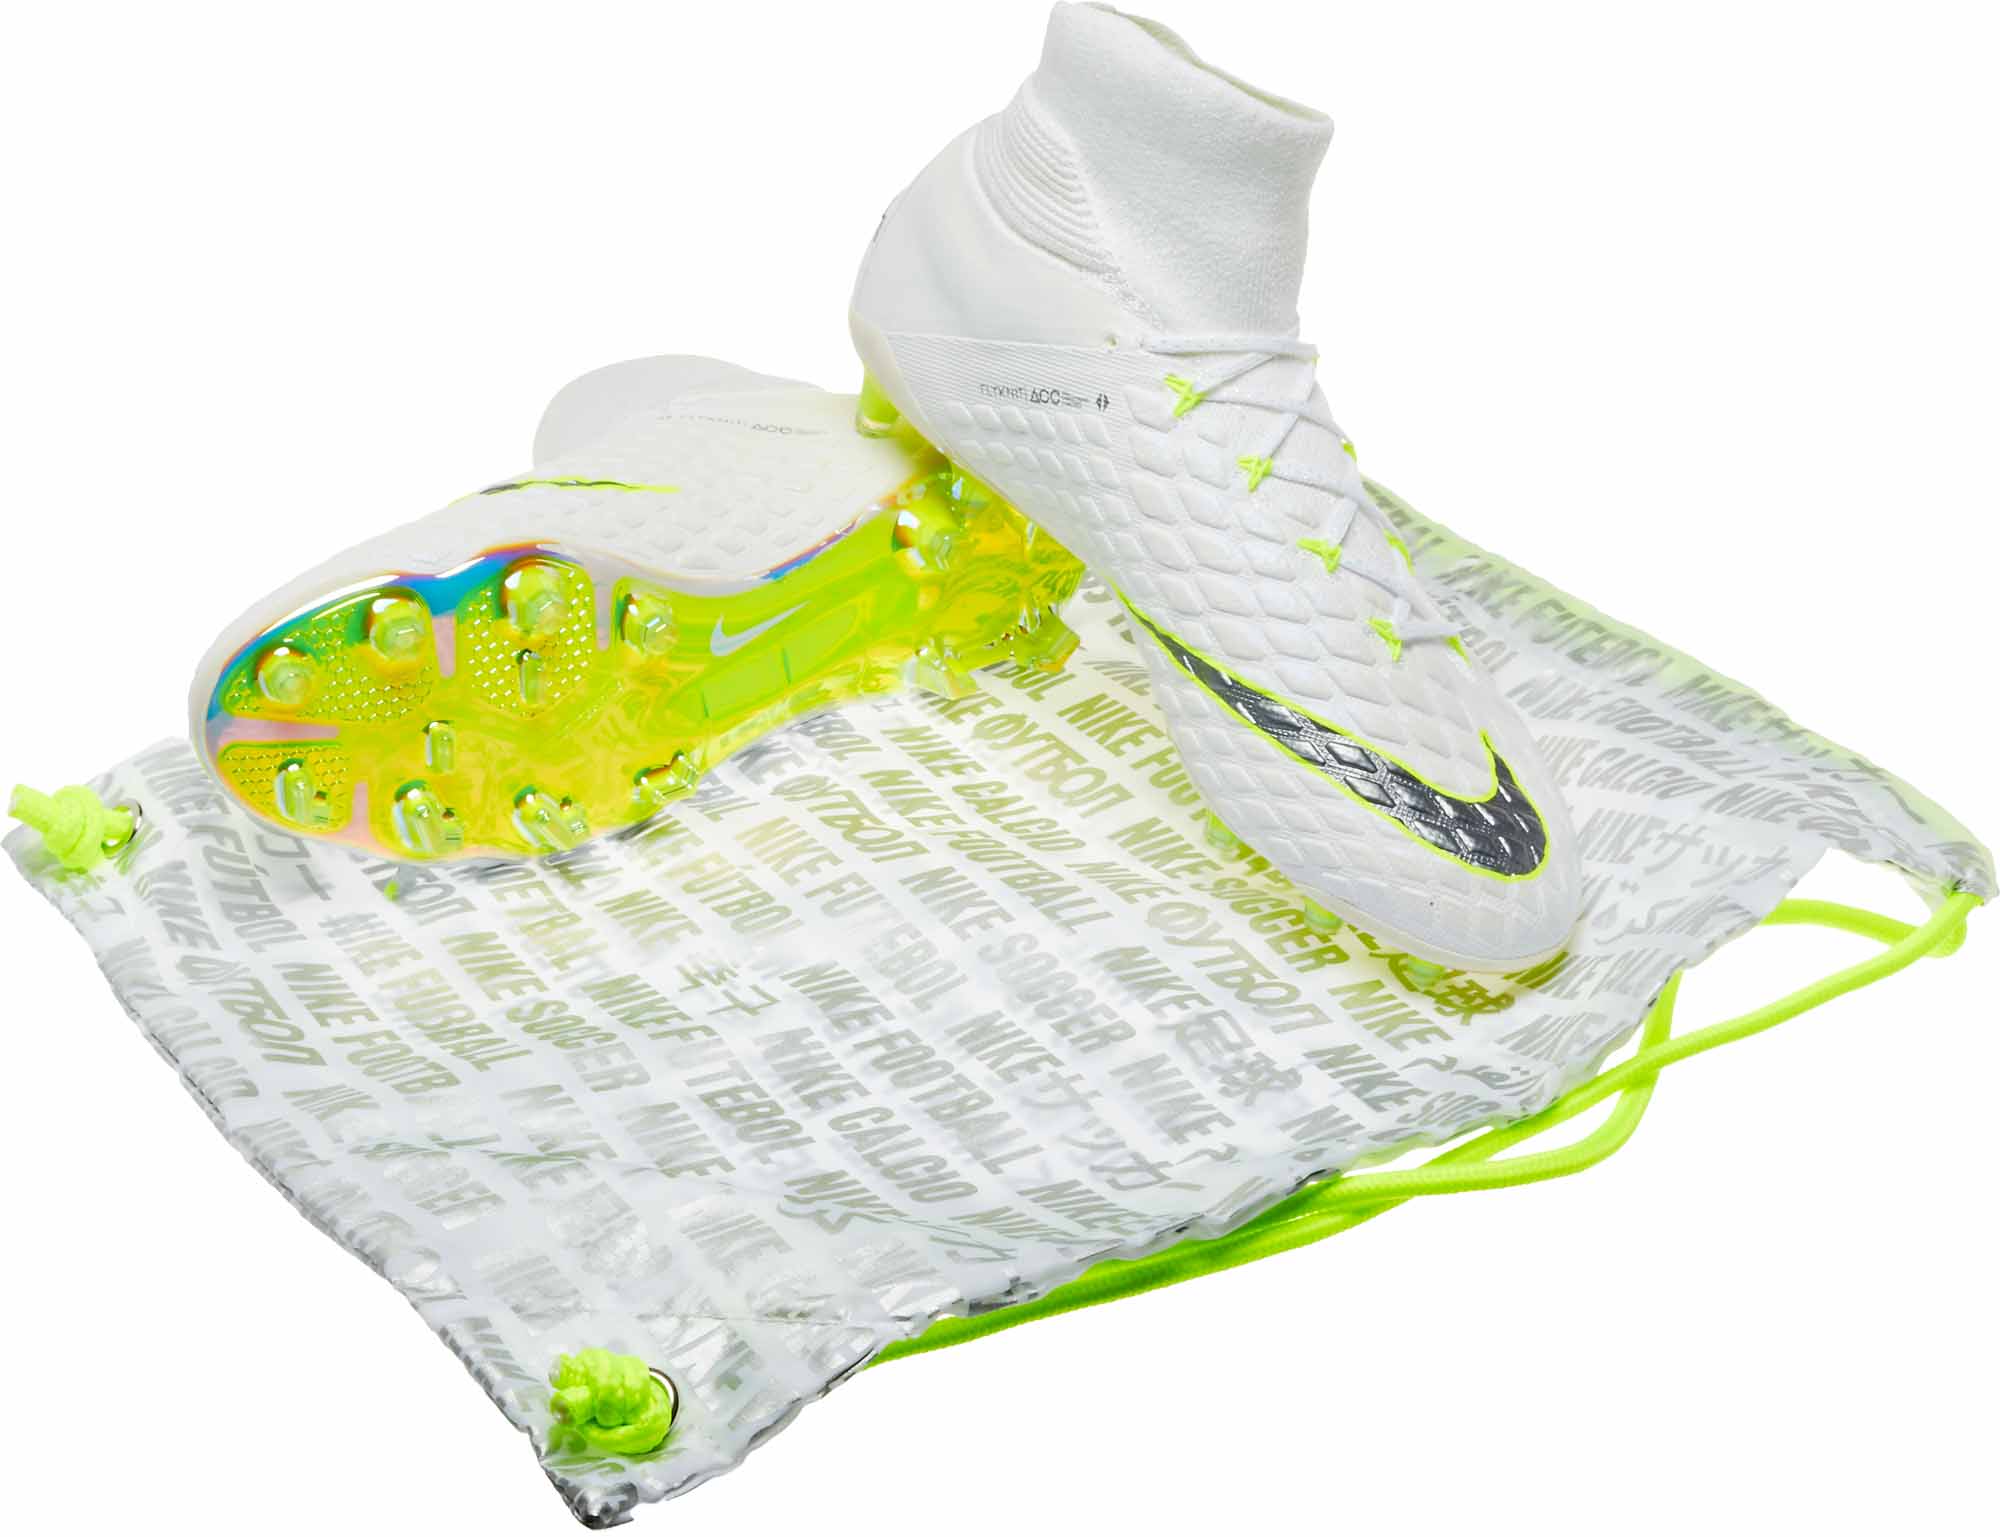 Foot Nike Hypervenom Blanc Nouveaux Iii Crampon Df